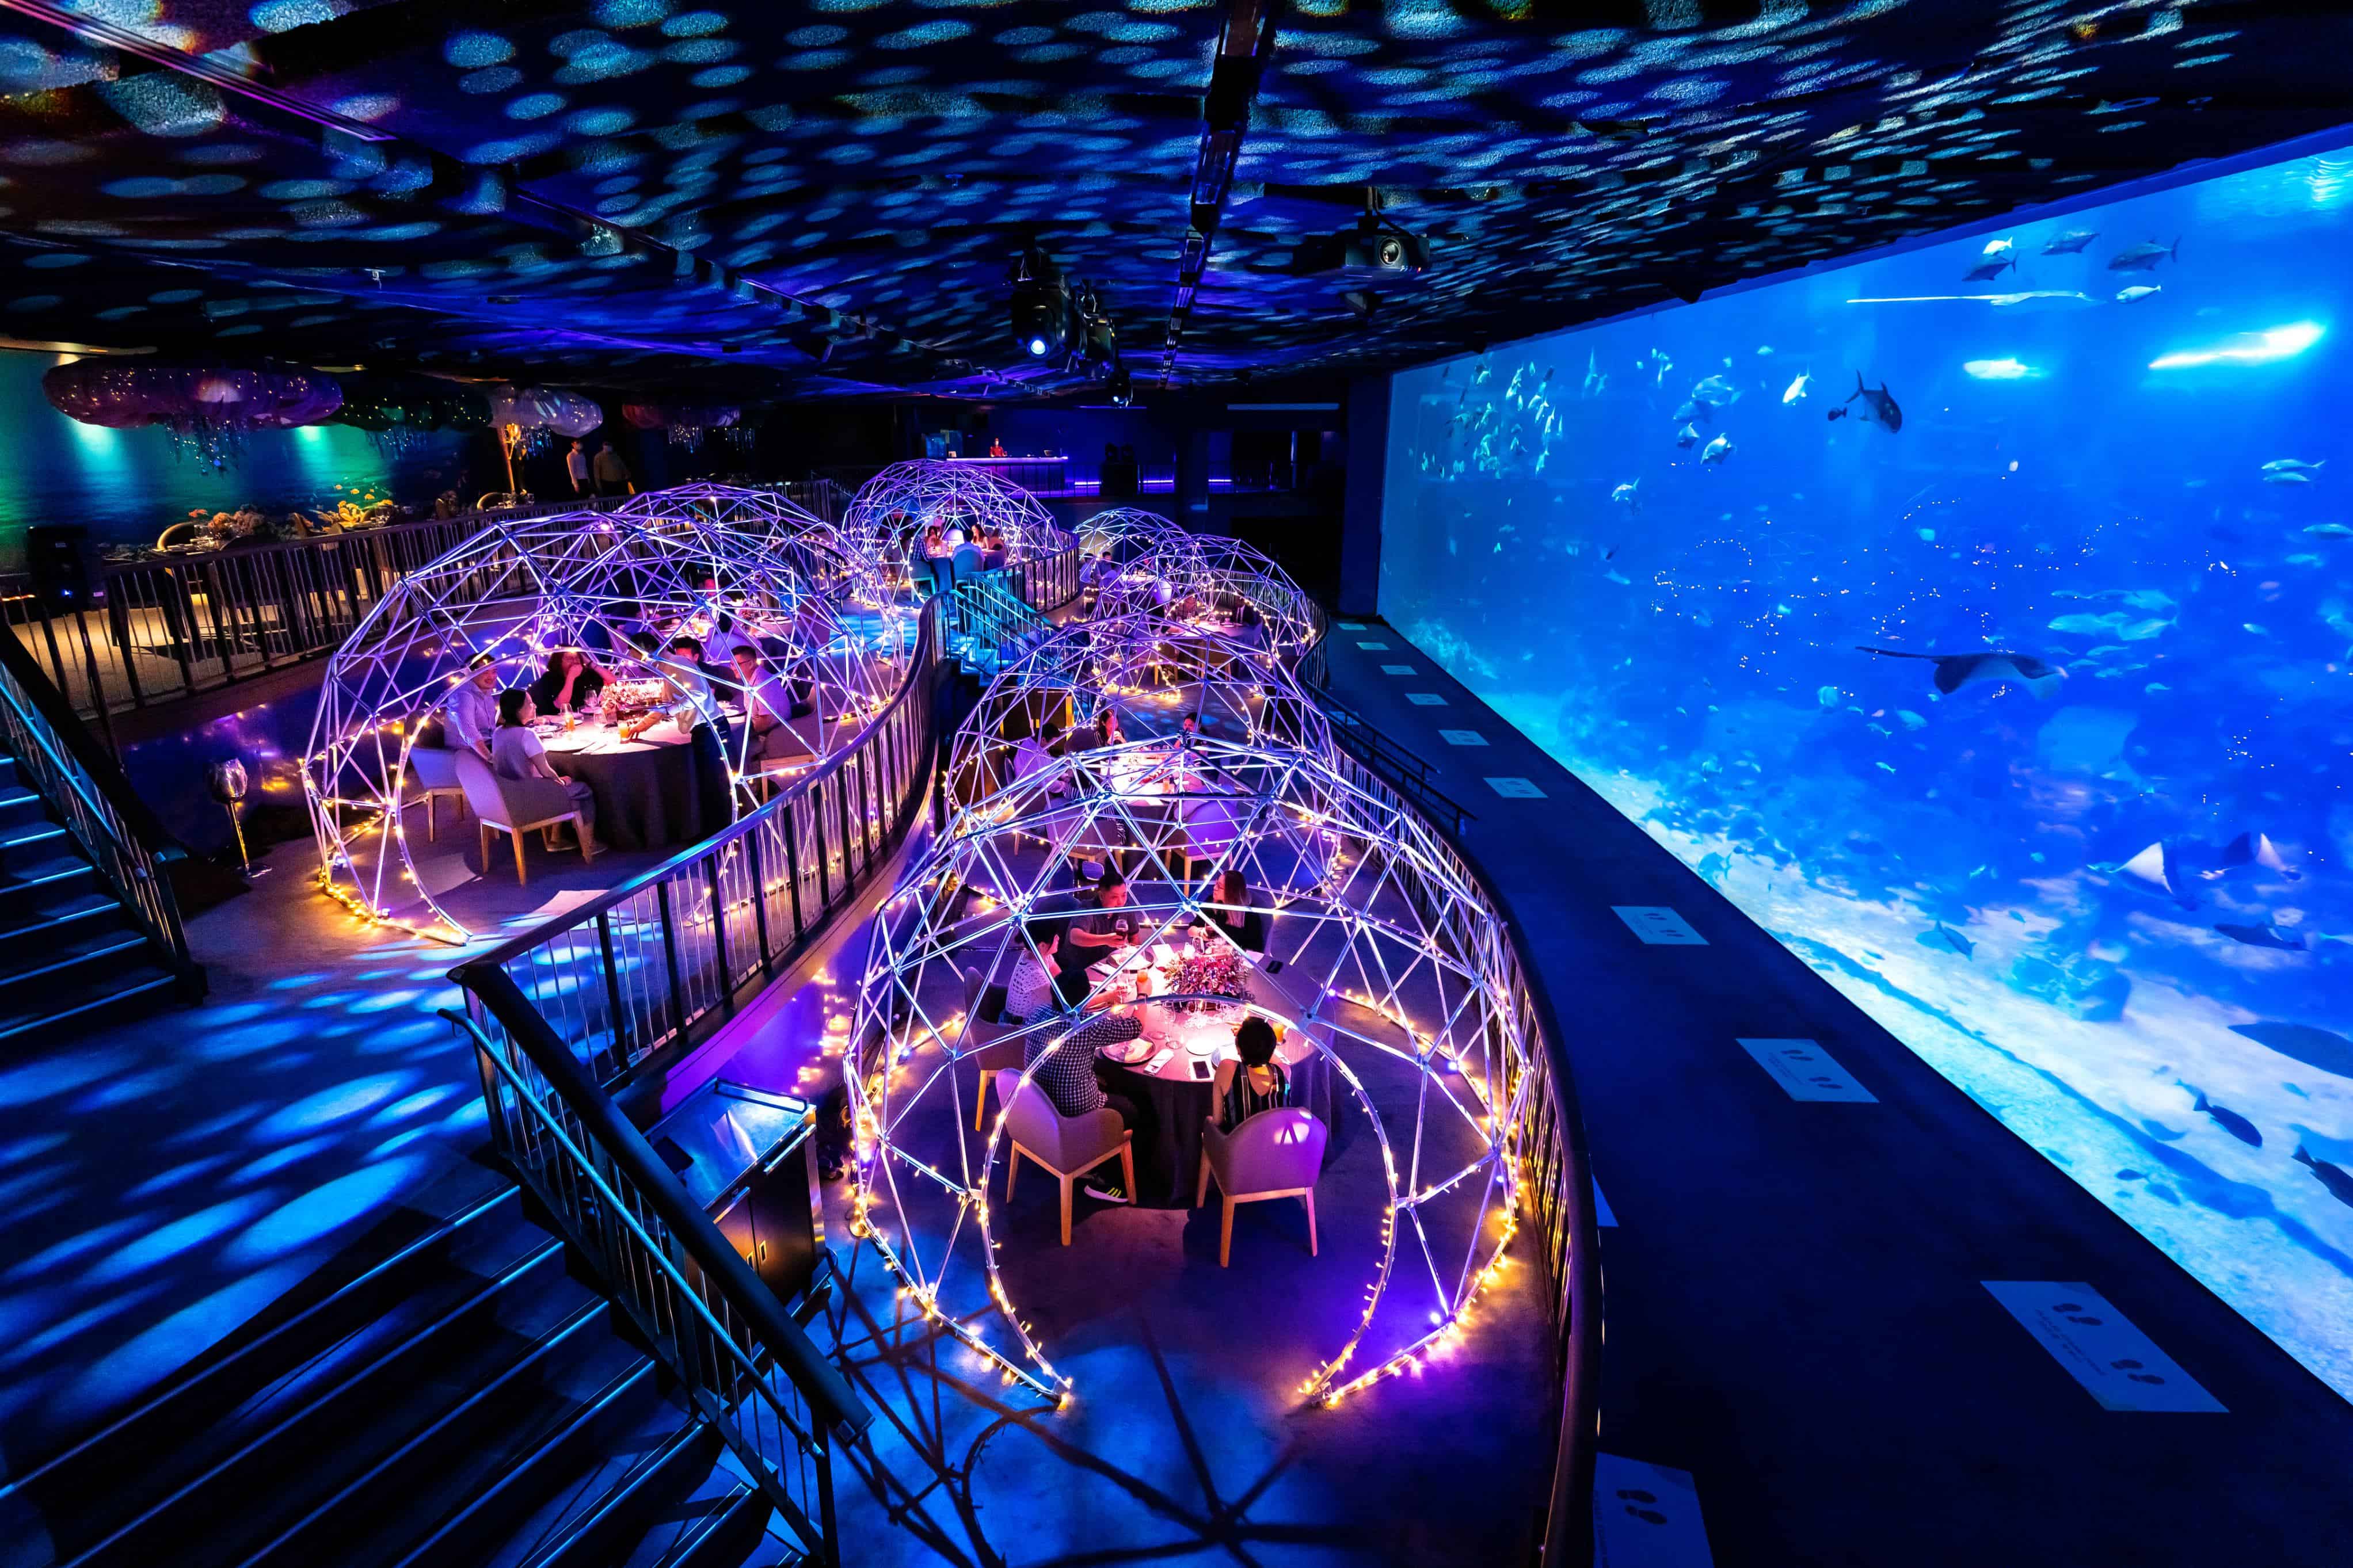 Can We Keep Aquarium In Dining Room